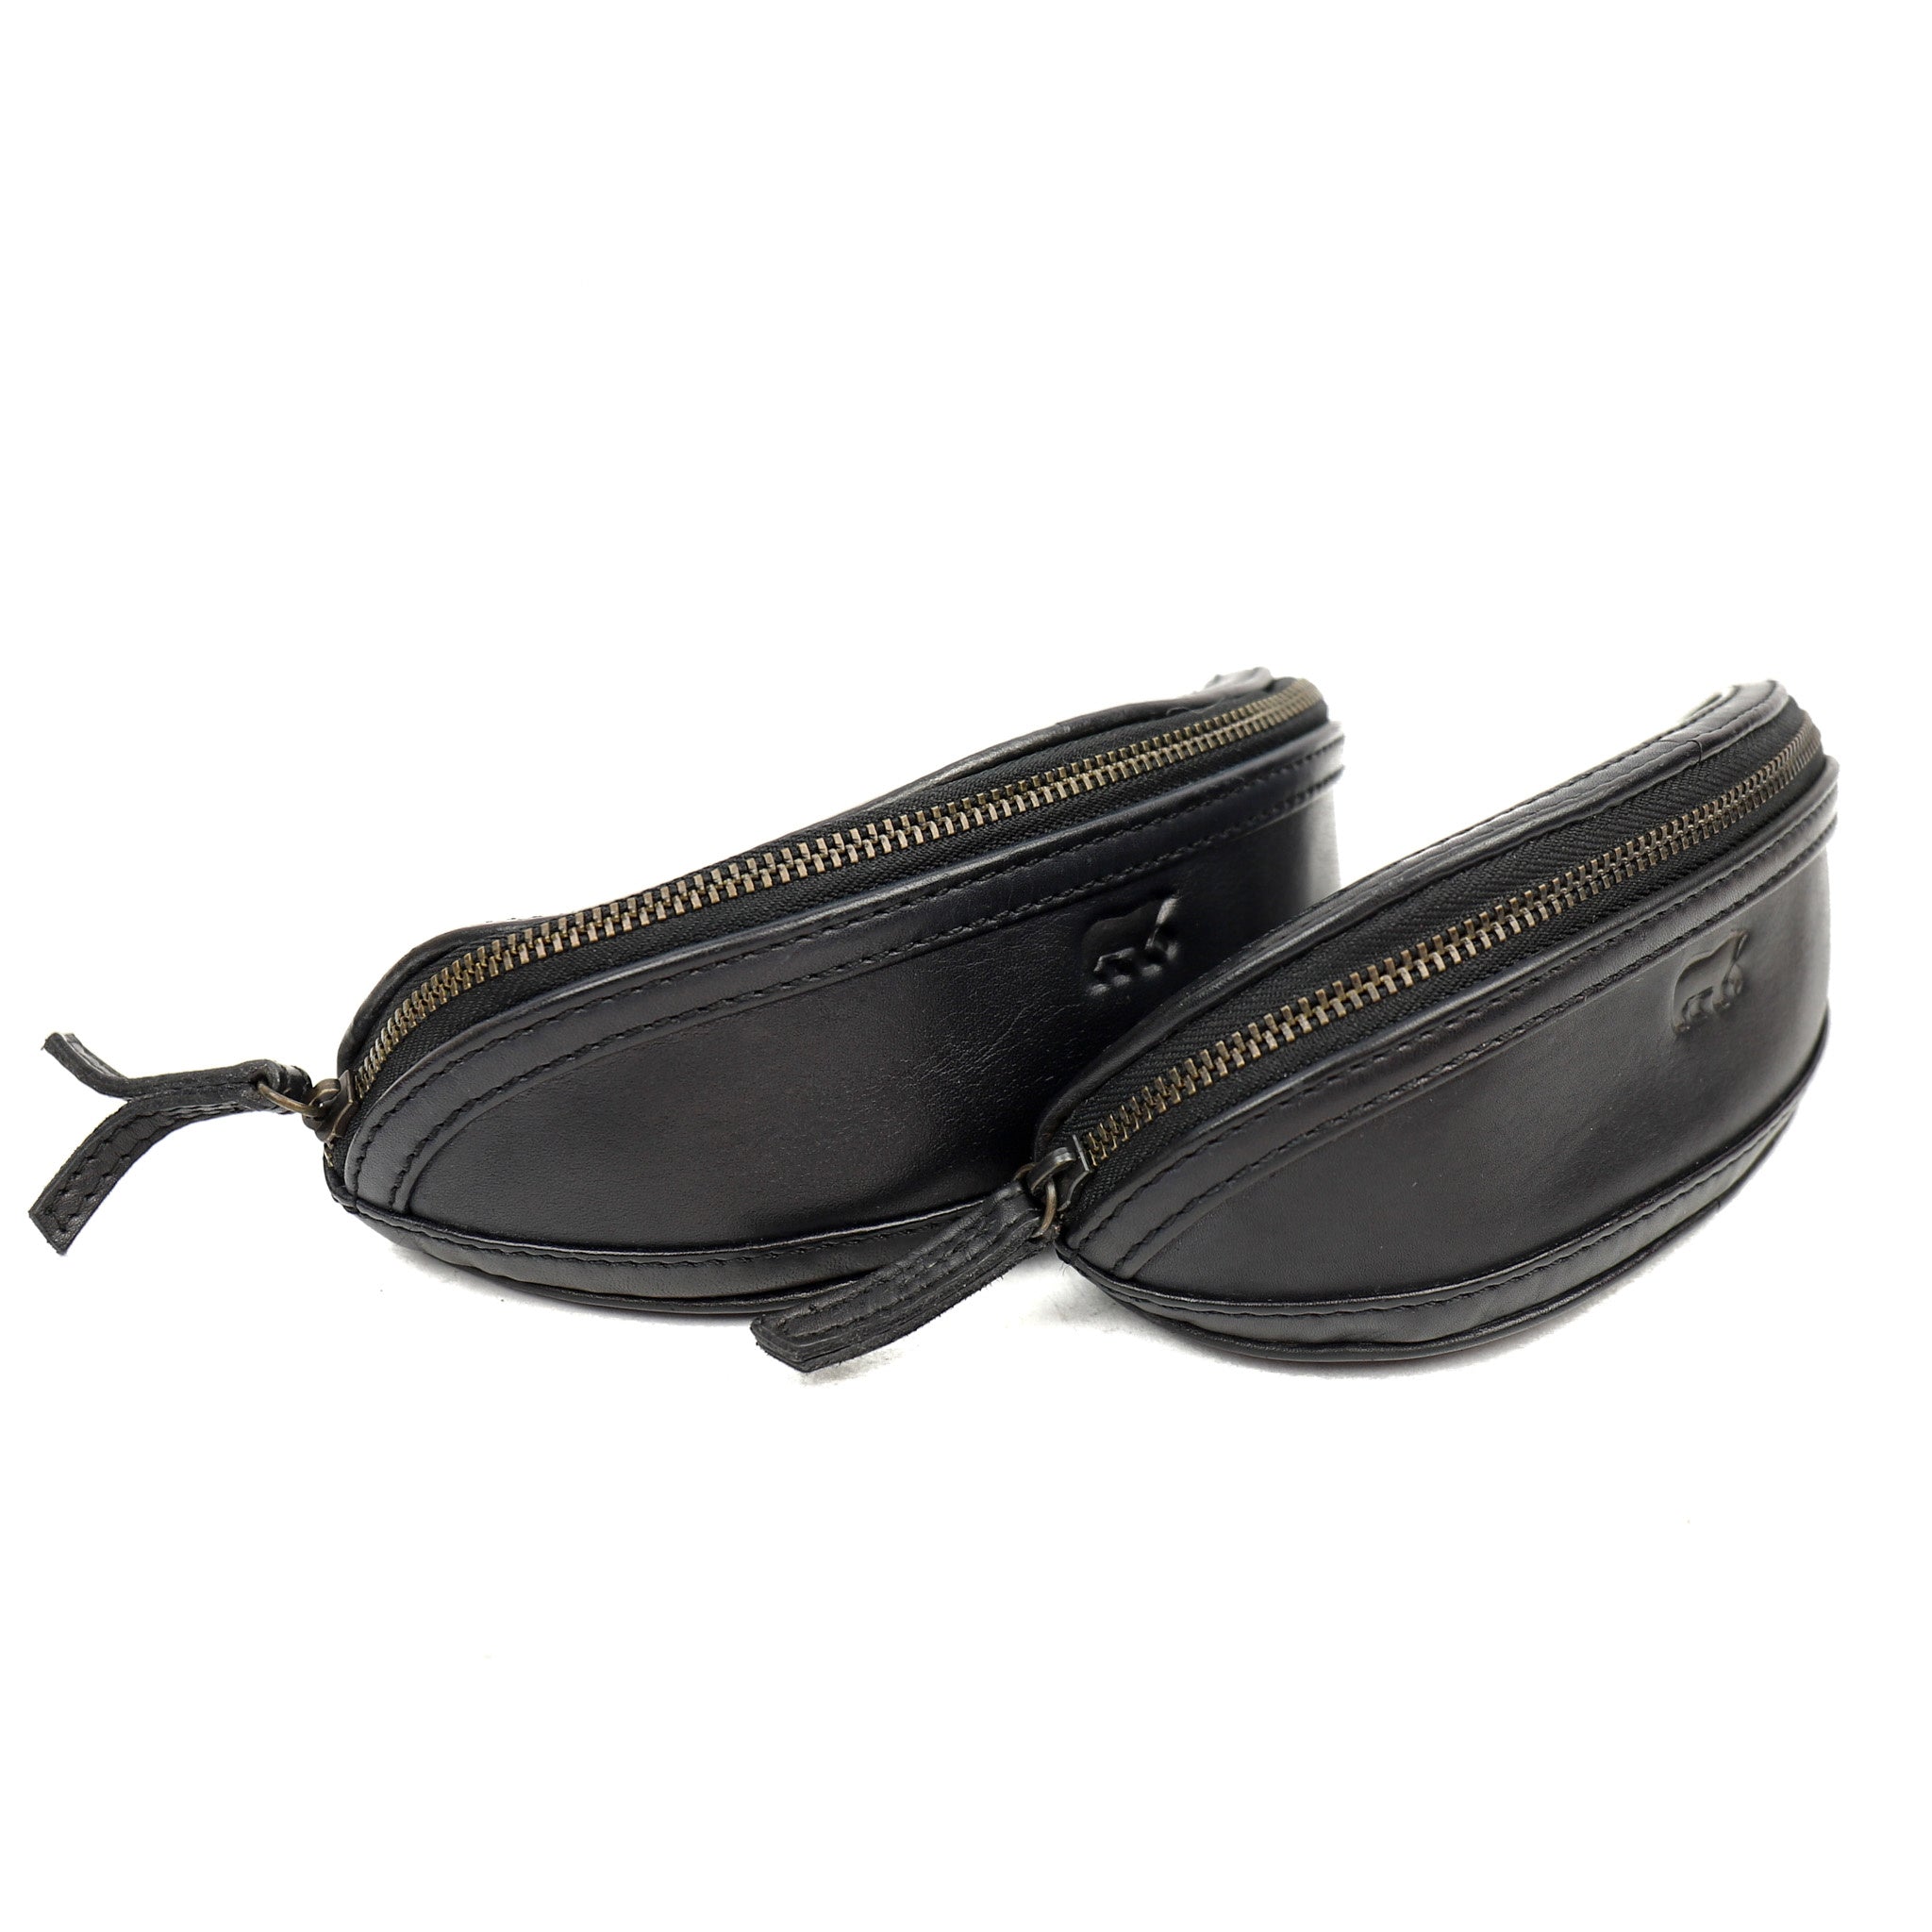 Glasses case 'Frits' S black - CL 42380